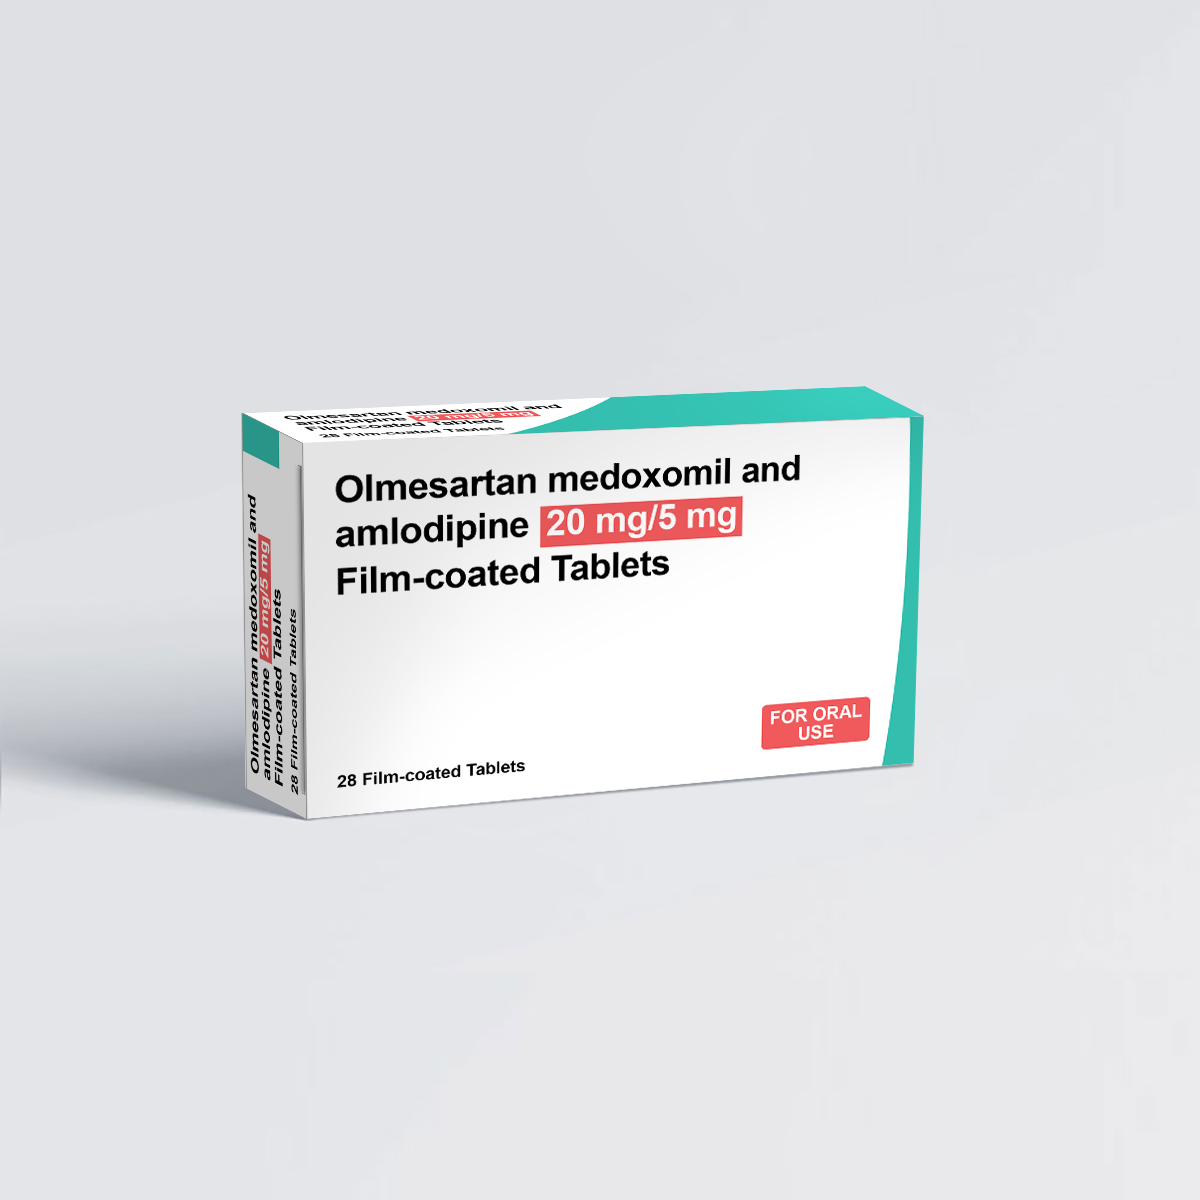 Presentation_Olmesartan medoxomil and amlodipine 20 mg-5 mg